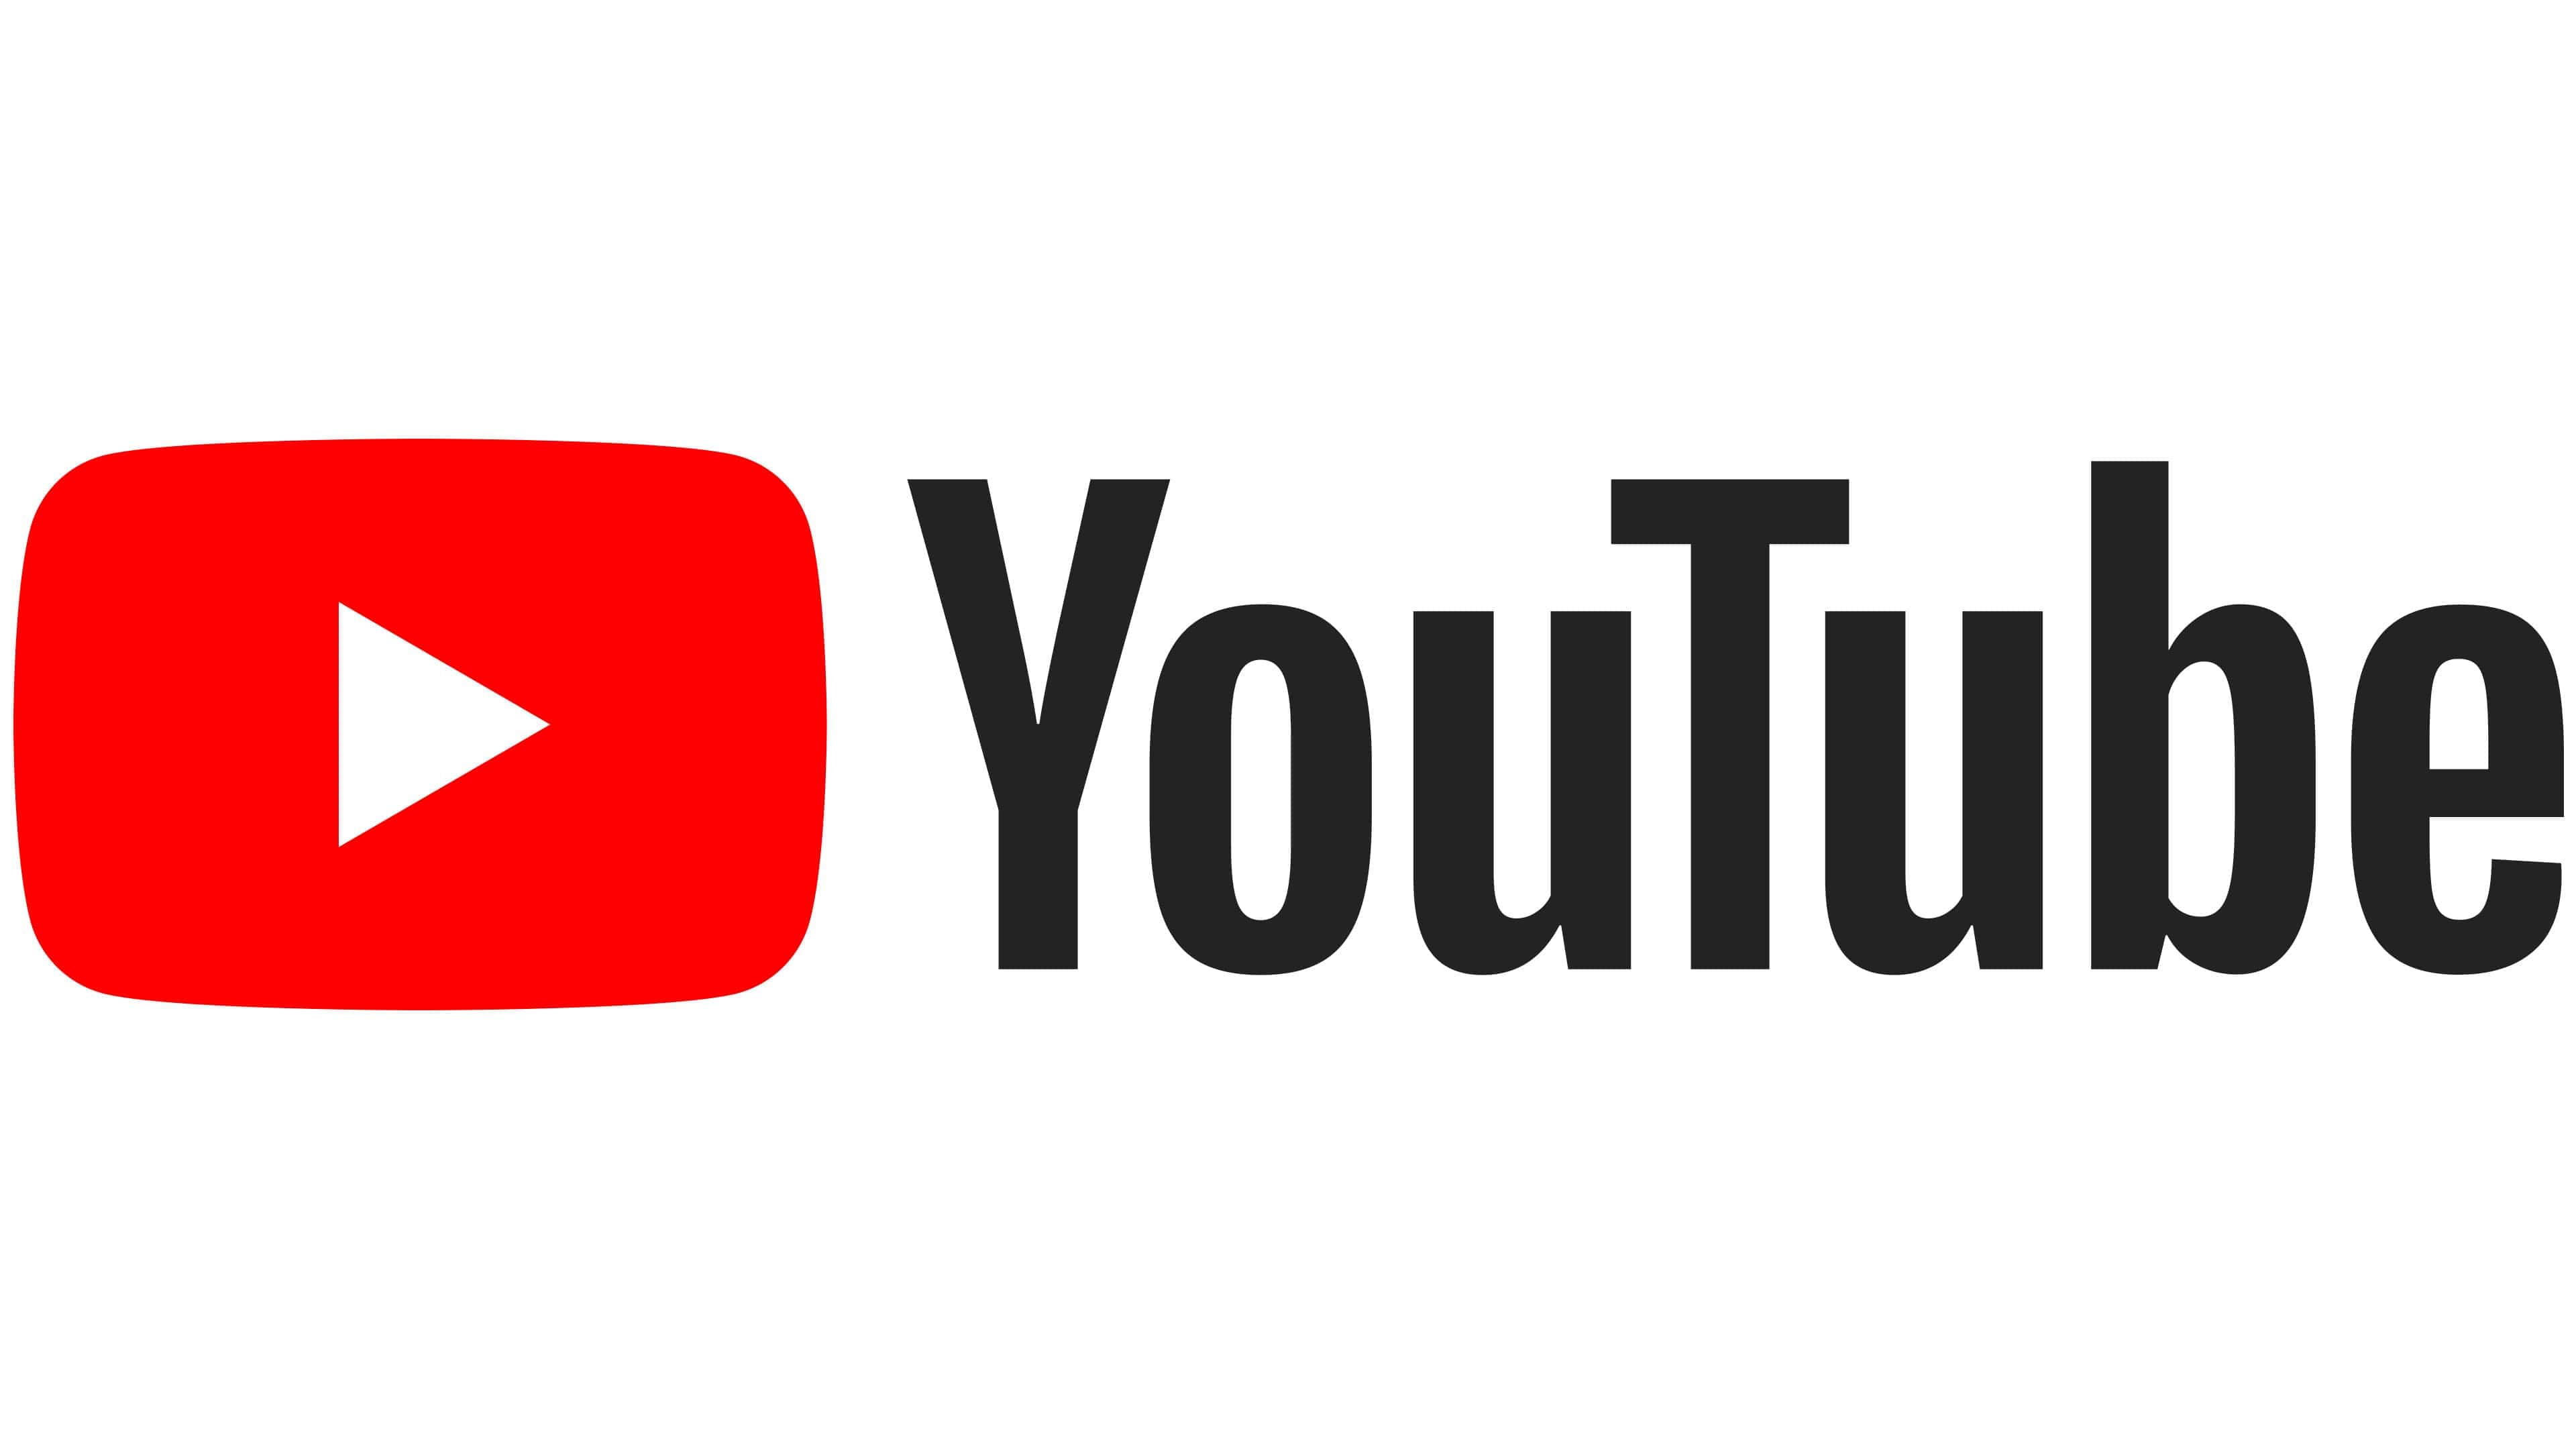 youtube_logo_2017_present.jpg